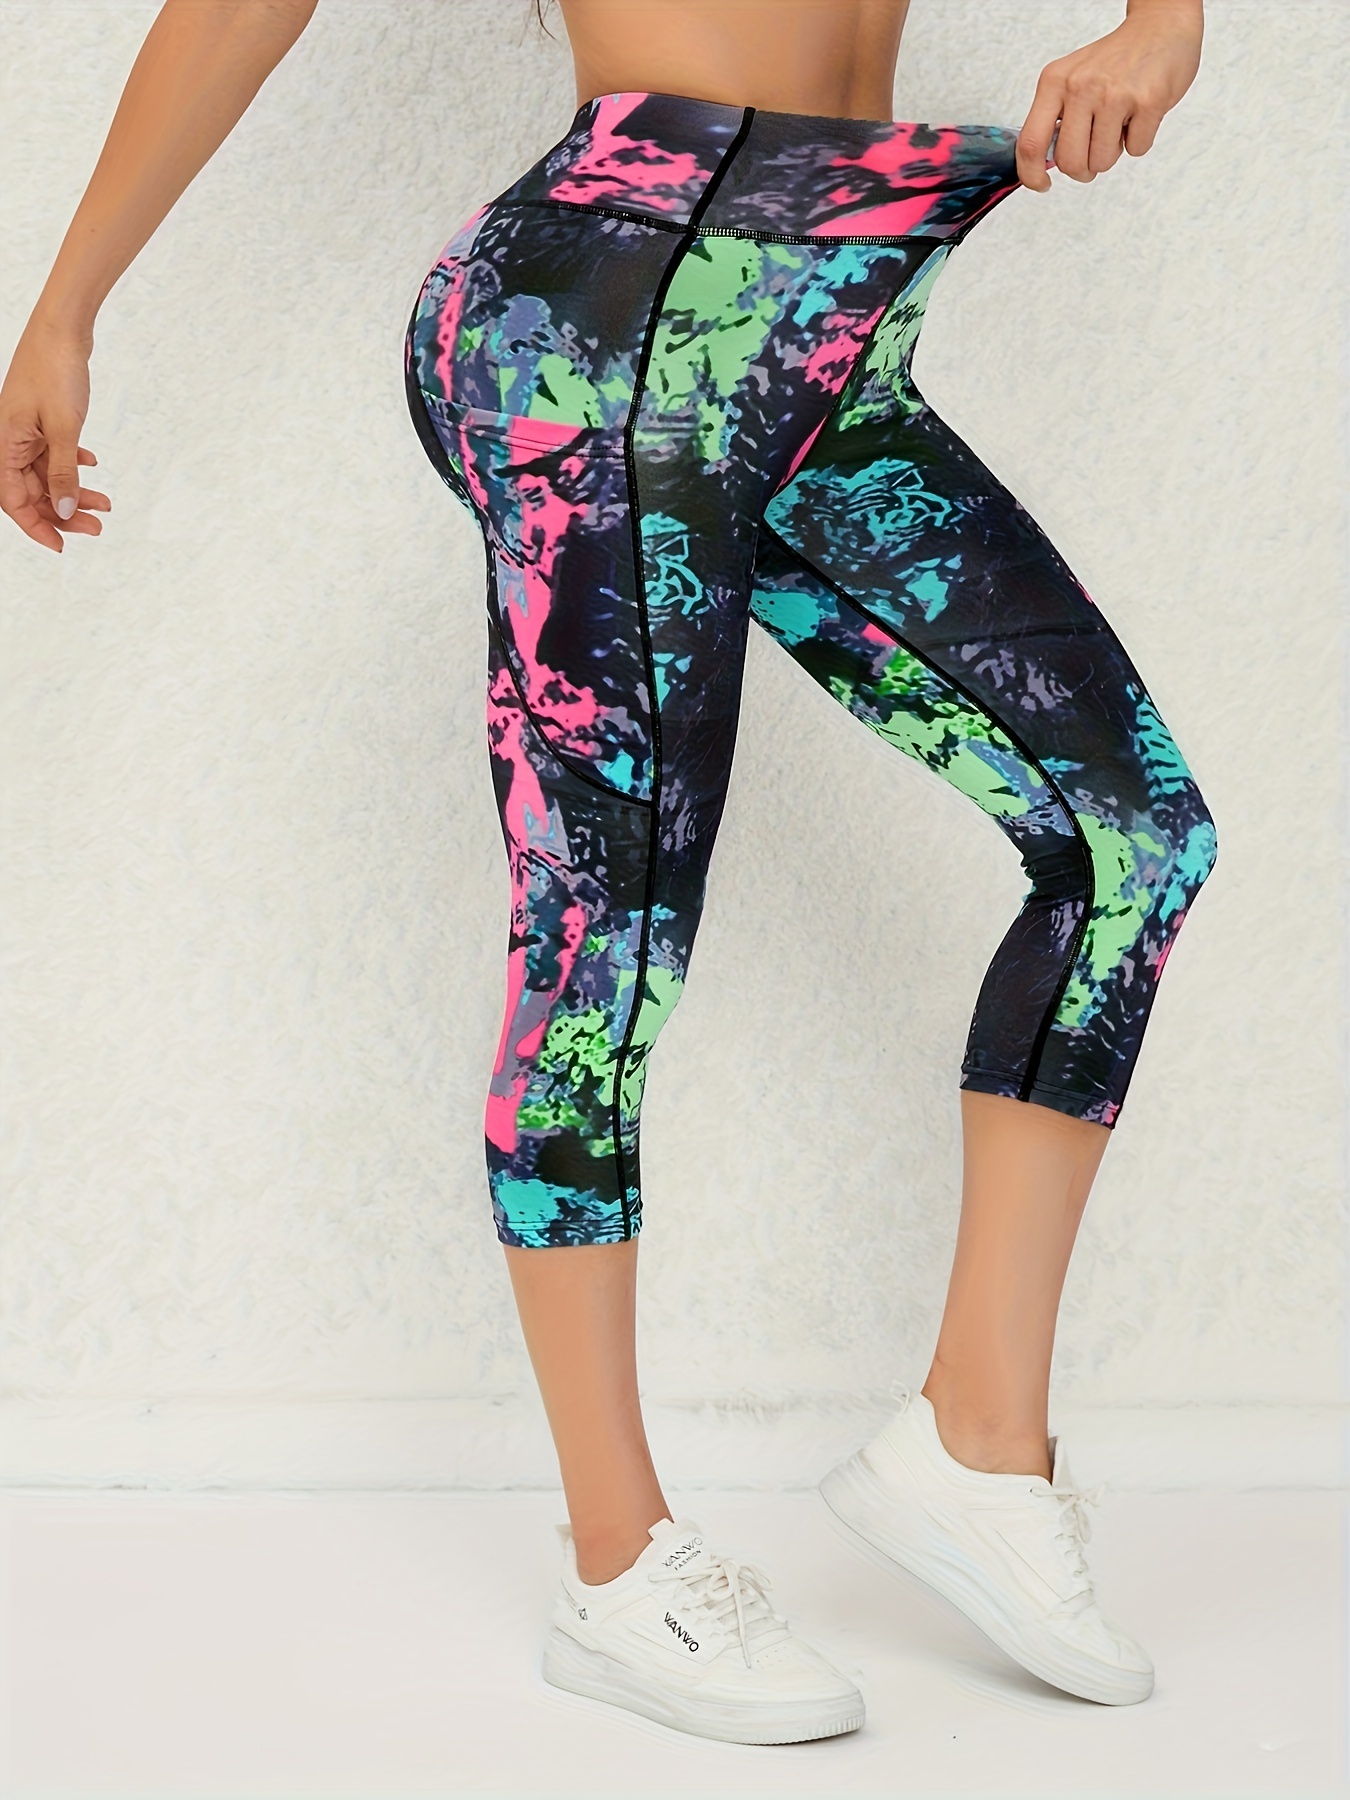 Color Print Stretchy Skinny Slim Capri Leggings With Pocket, High Waist  Butt Lifting Tummy Control Running Sports Fitness Capri Pants, Women's  Activew